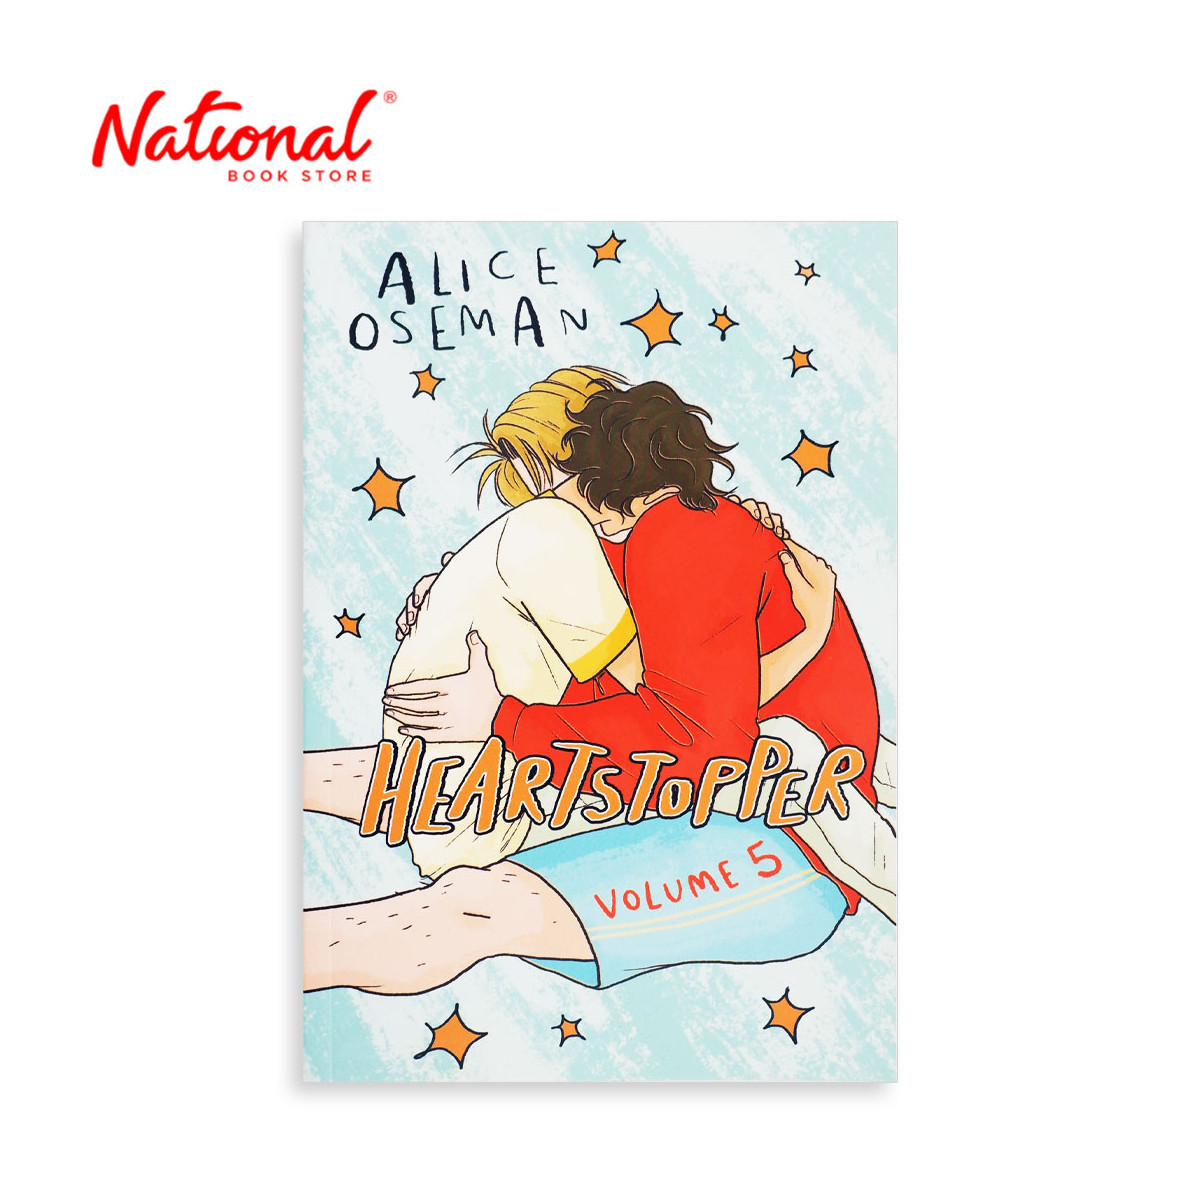 Heartstopper 5 by Alice Oseman - Trade Paperback - Teens Fiction